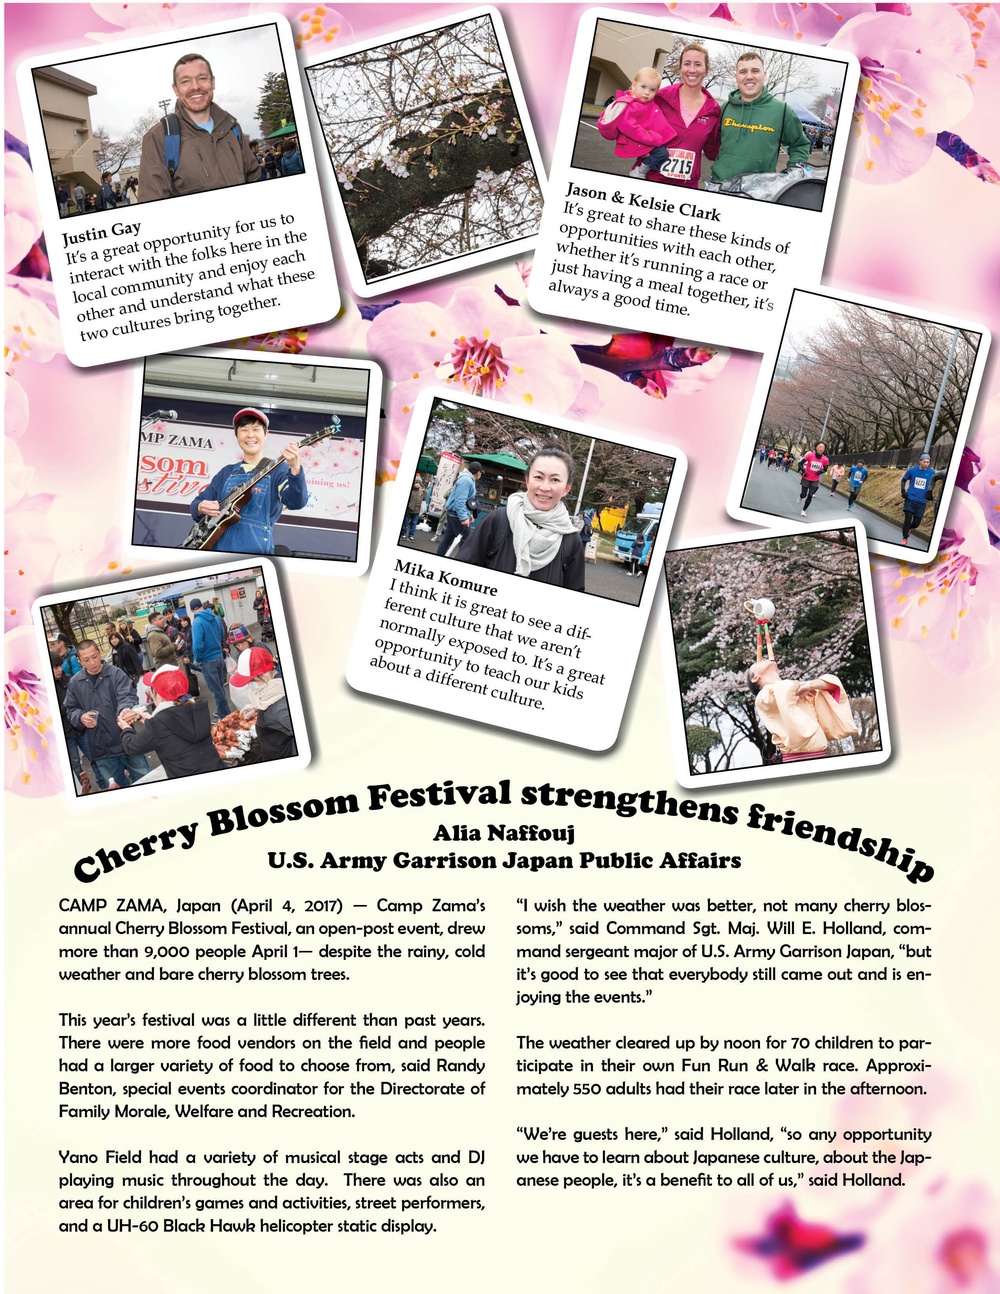 Cherry Blossom Festival strengthens friendship